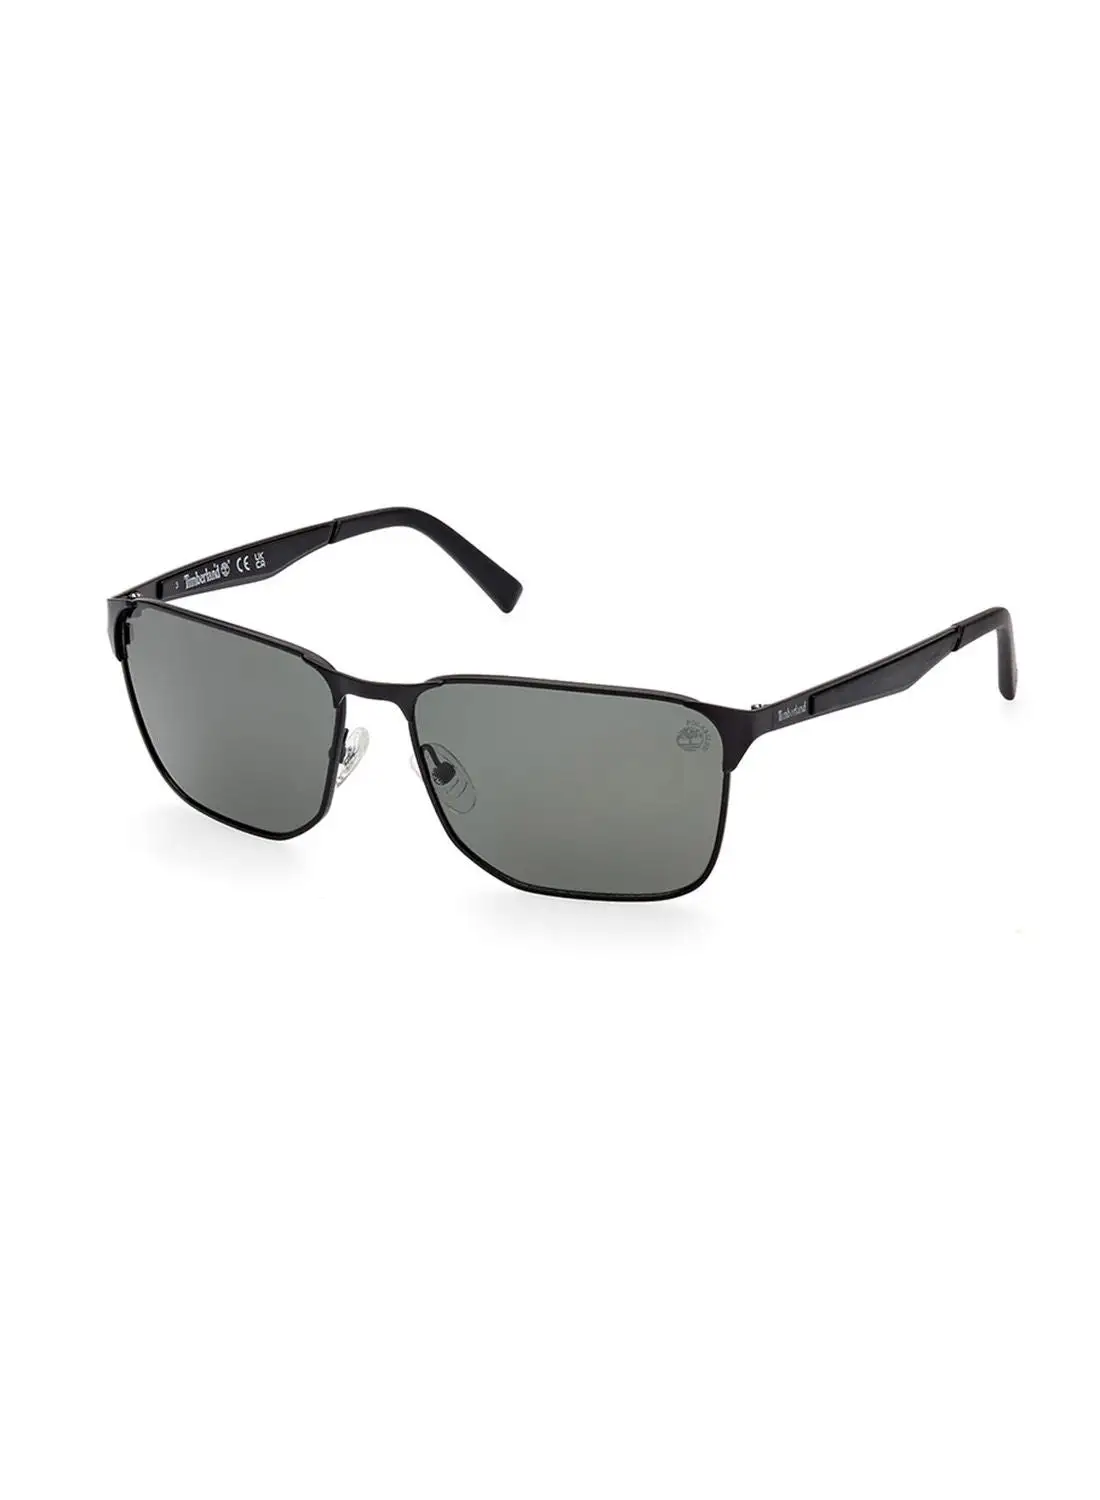 Timberland Sunglasses For Men TB929902R59